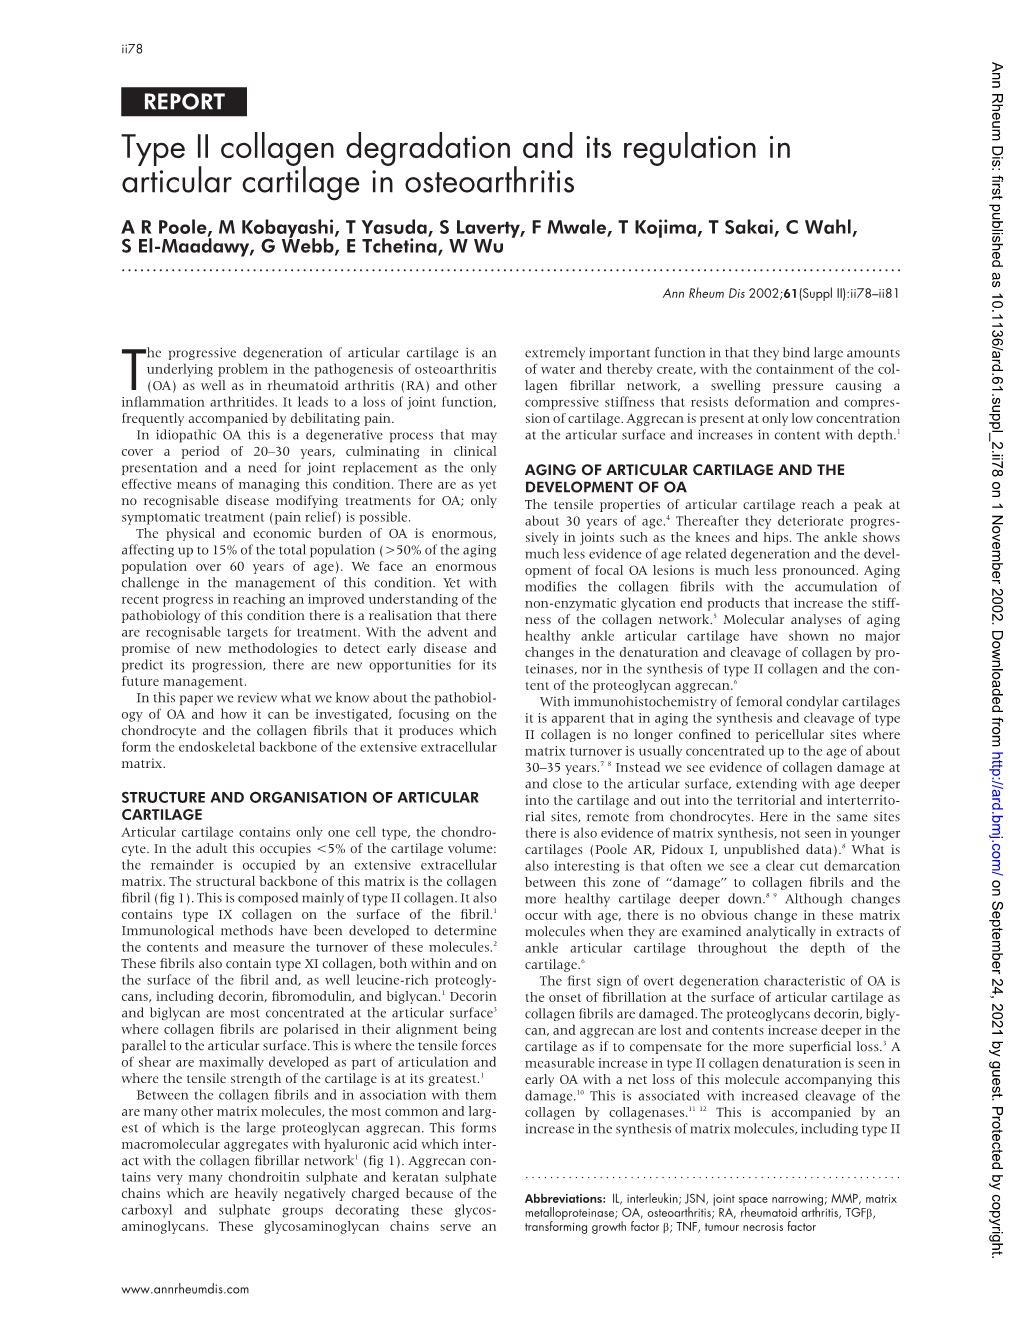 Type II Collagen Degradation and Its Regulation in Articular Cartilage in Osteoarthritis